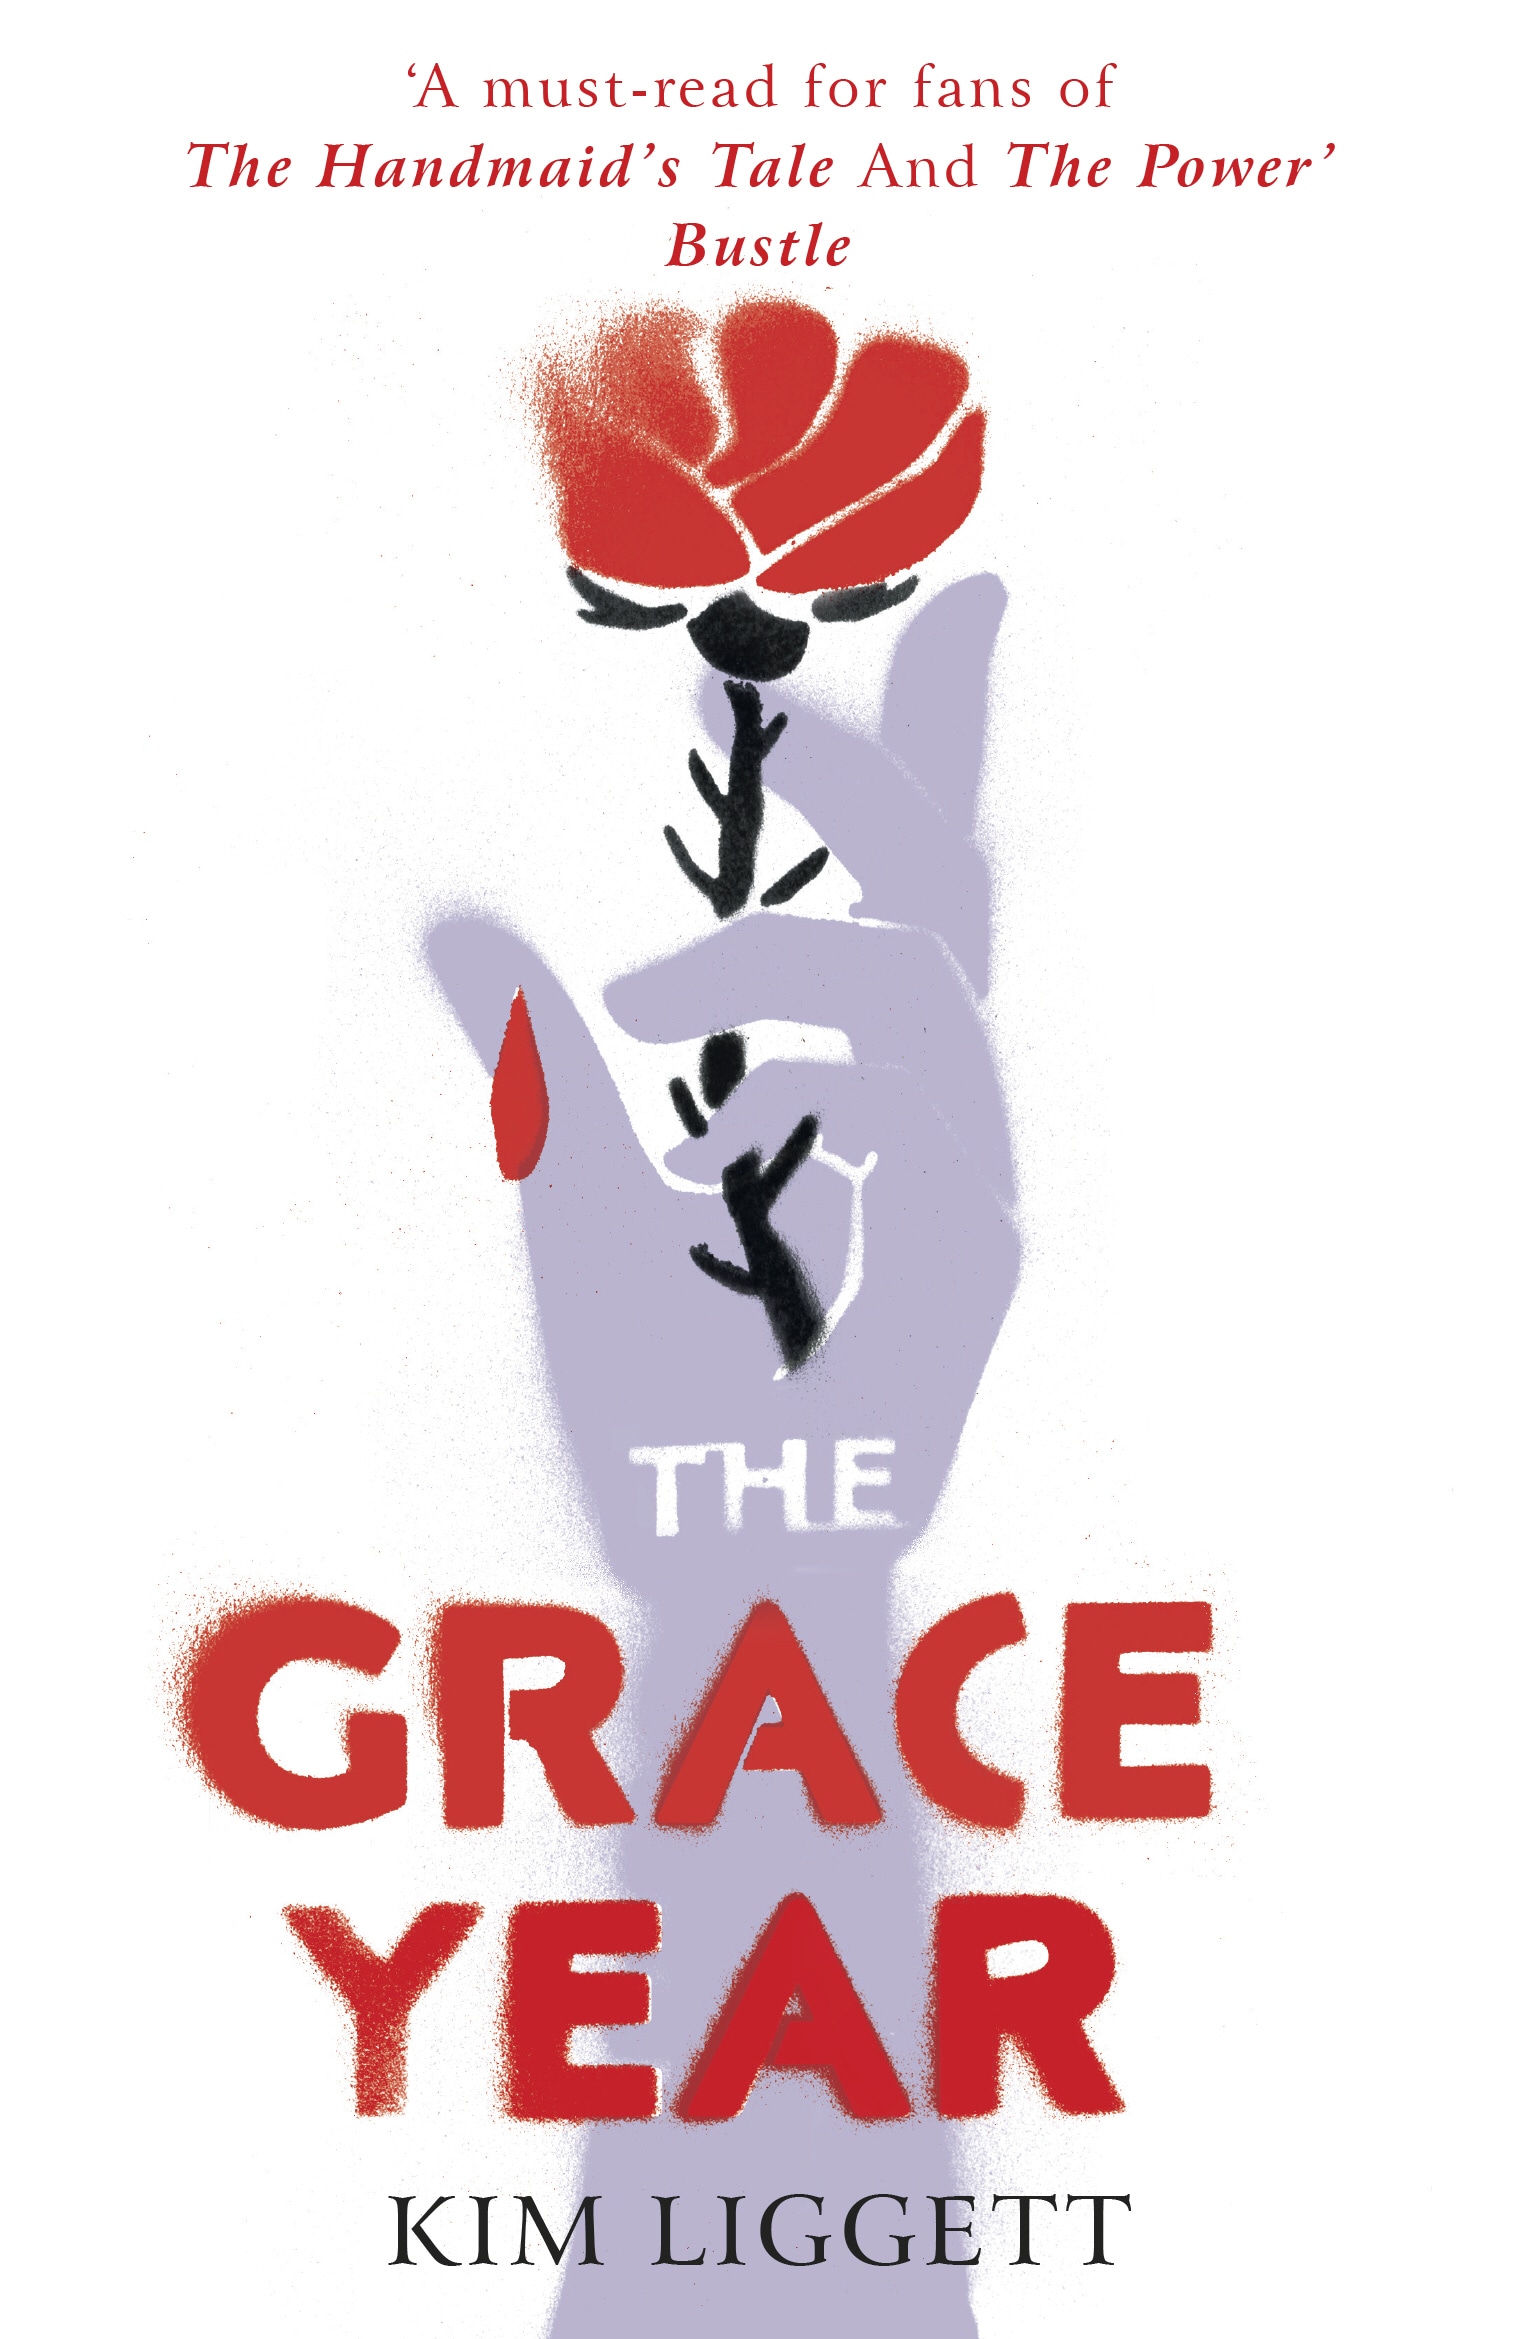 Book “The Grace Year” by Kim Liggett — September 3, 2020